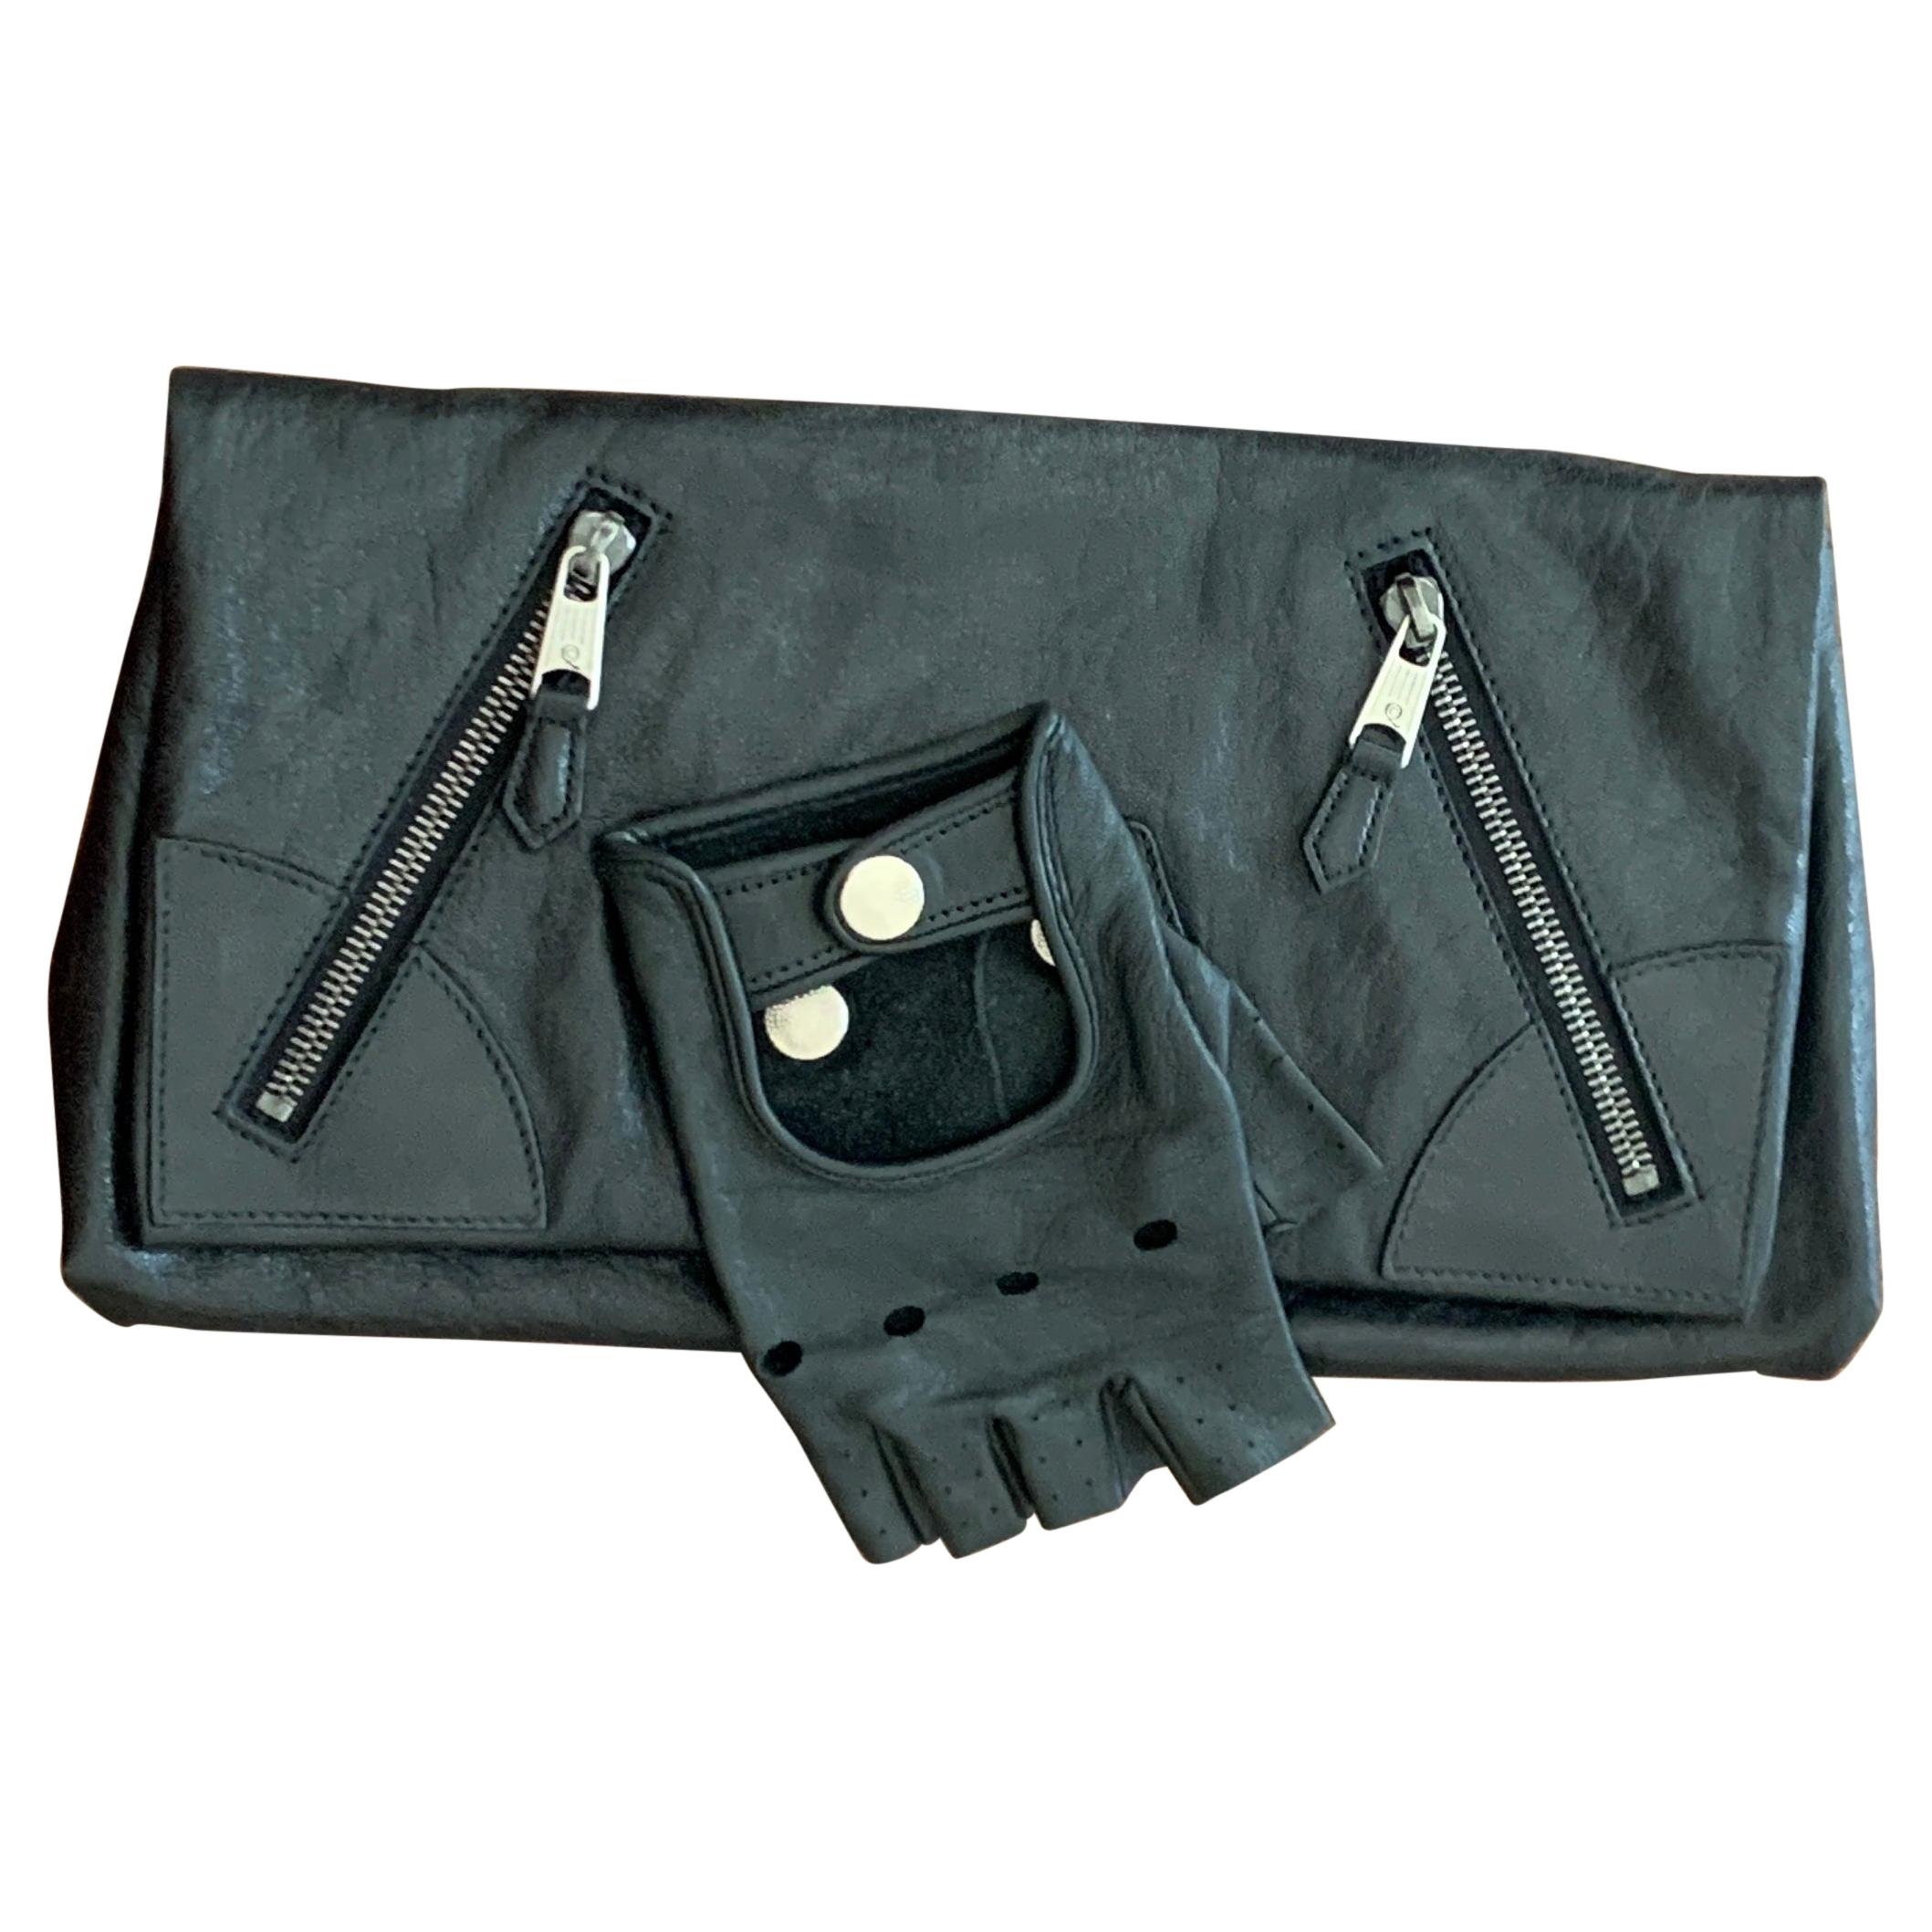 Alexander McQueen Faithful Glove Clutch in Black Leather 